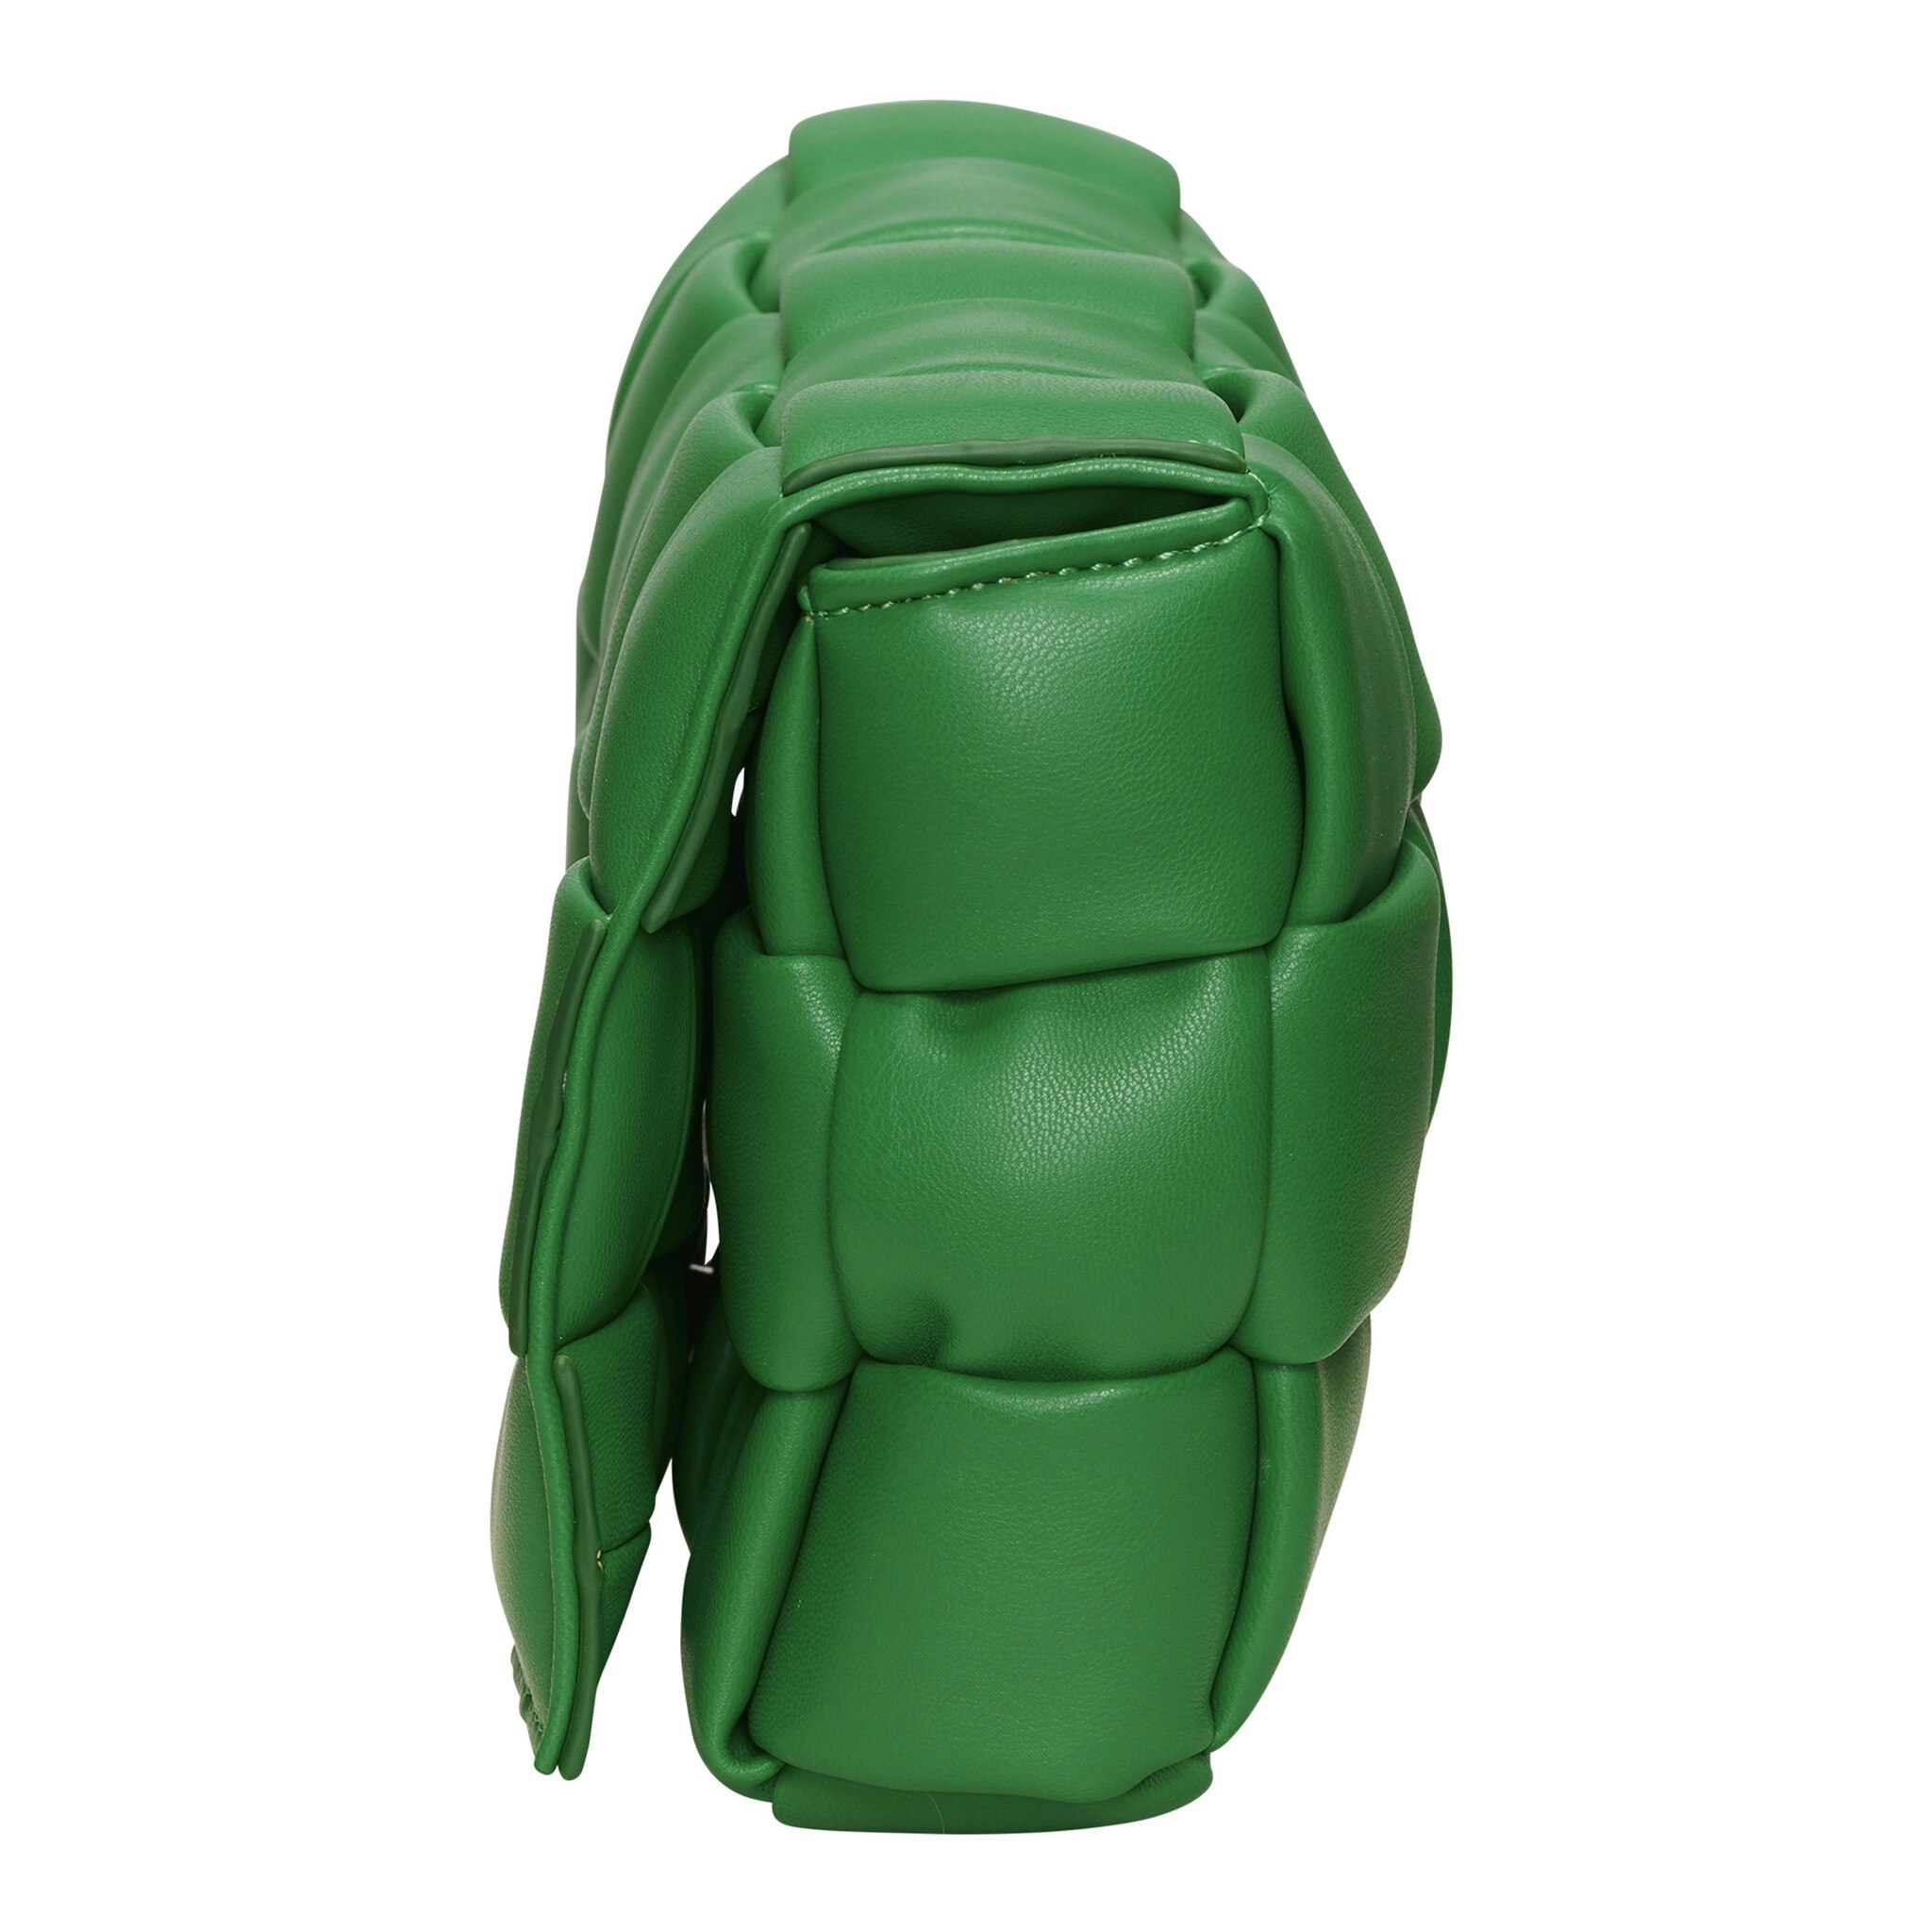 Noella - Brick Bag, Bright Green